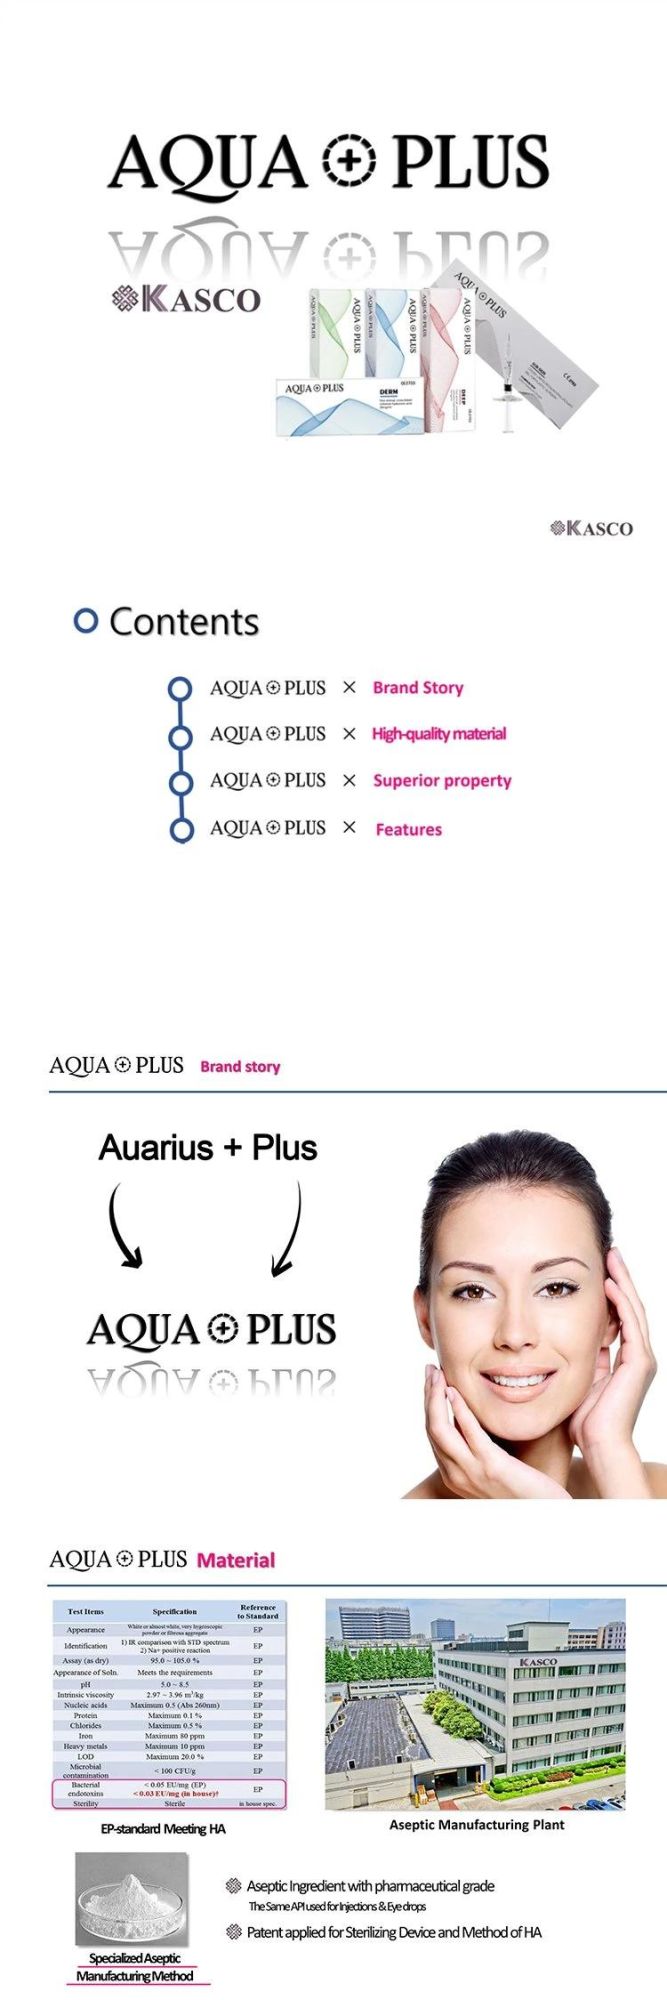 Aqua Plus Injection to Buy Injectable Dermal Filler 2ml Lip Fullness Hyaluronic Acid Filler